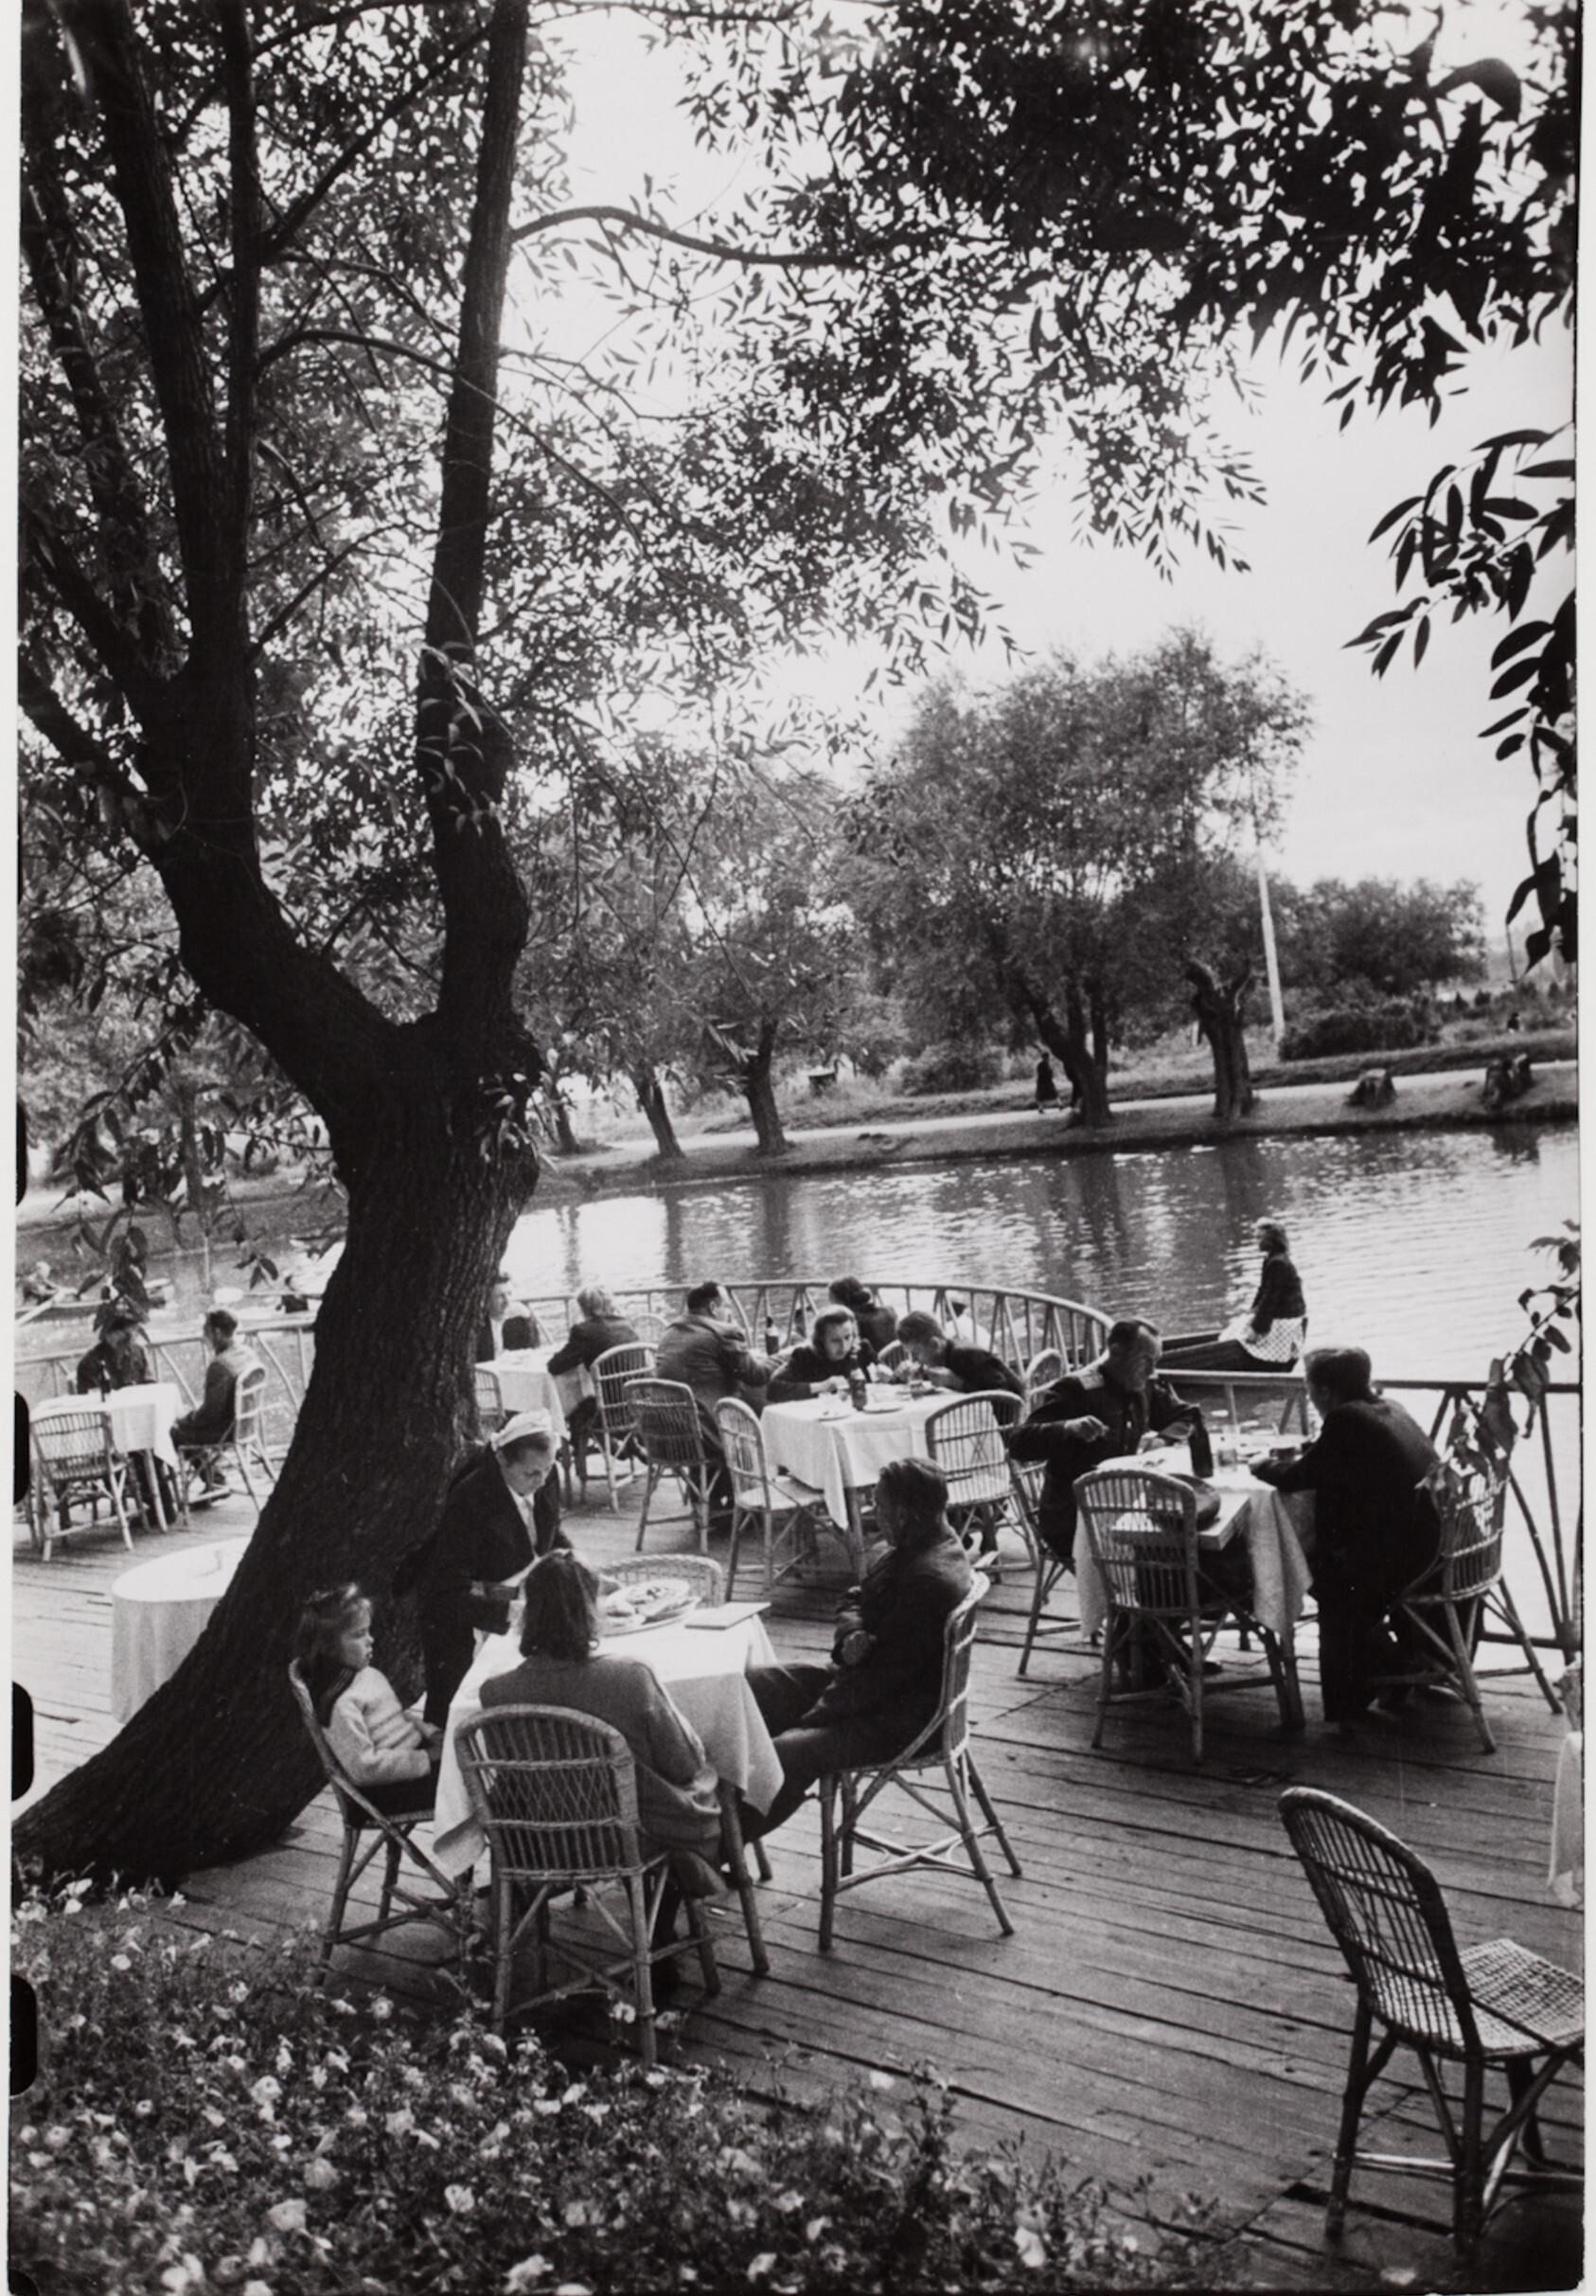 Люди едят у Днепра, Киев, 1947 год. Фотограф Роберт Капа